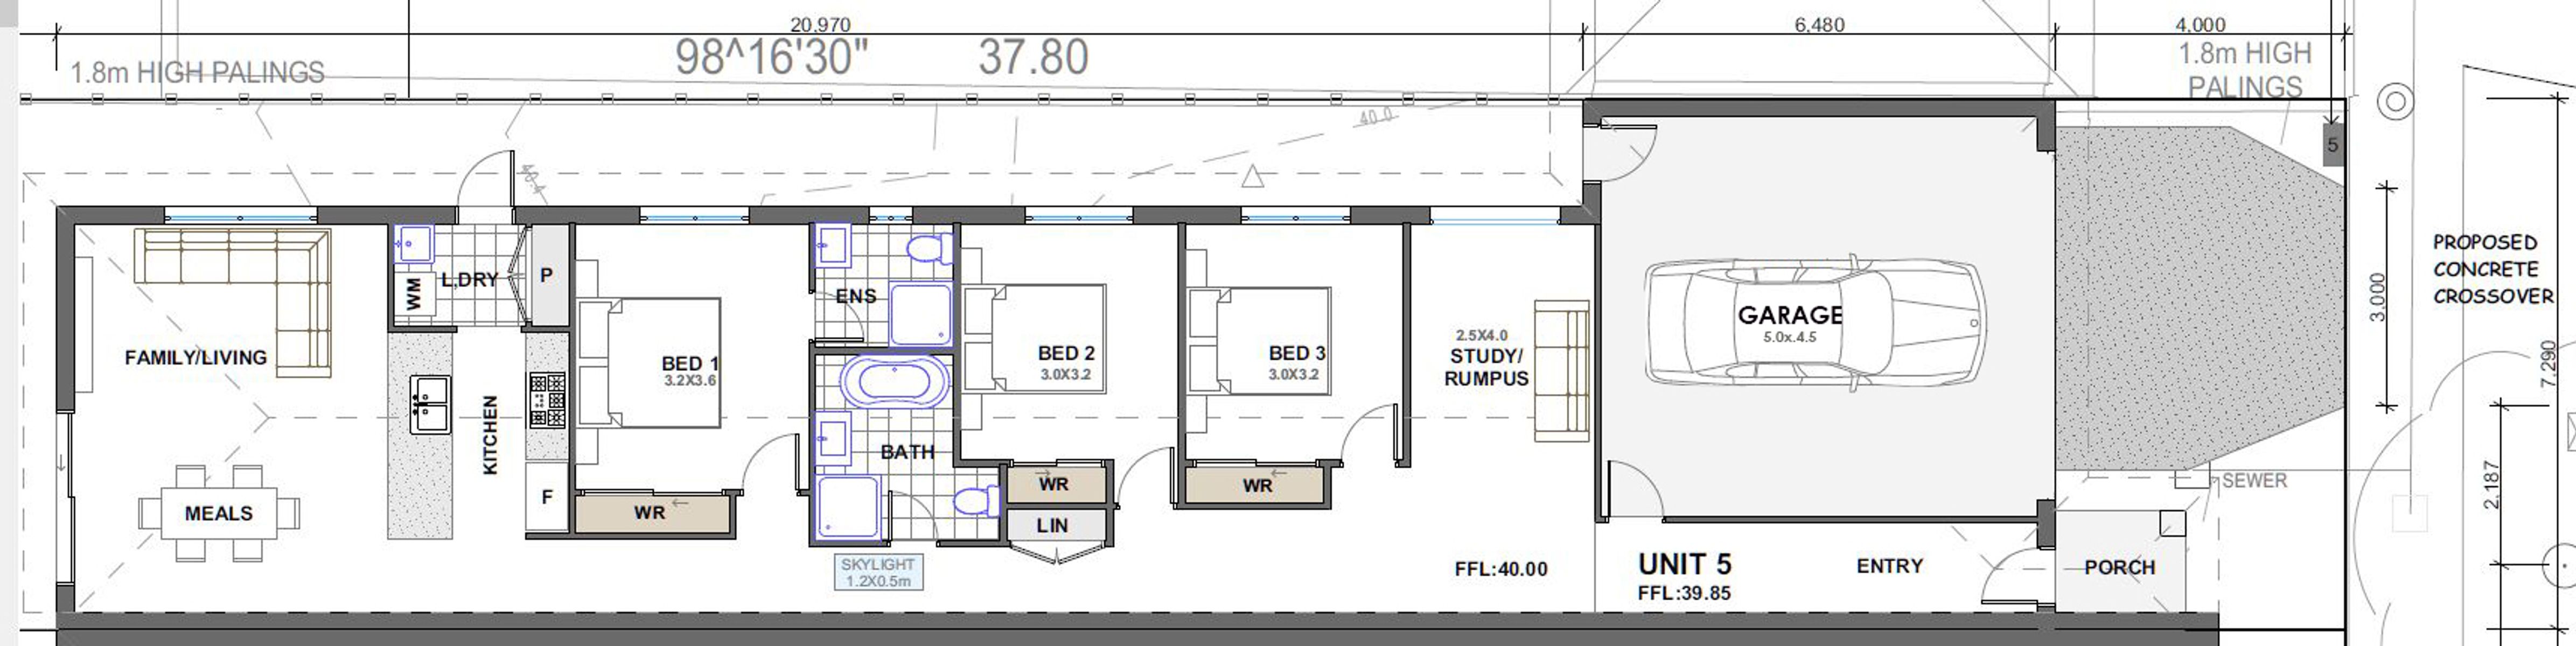 Floor Plan unit 5 single garage